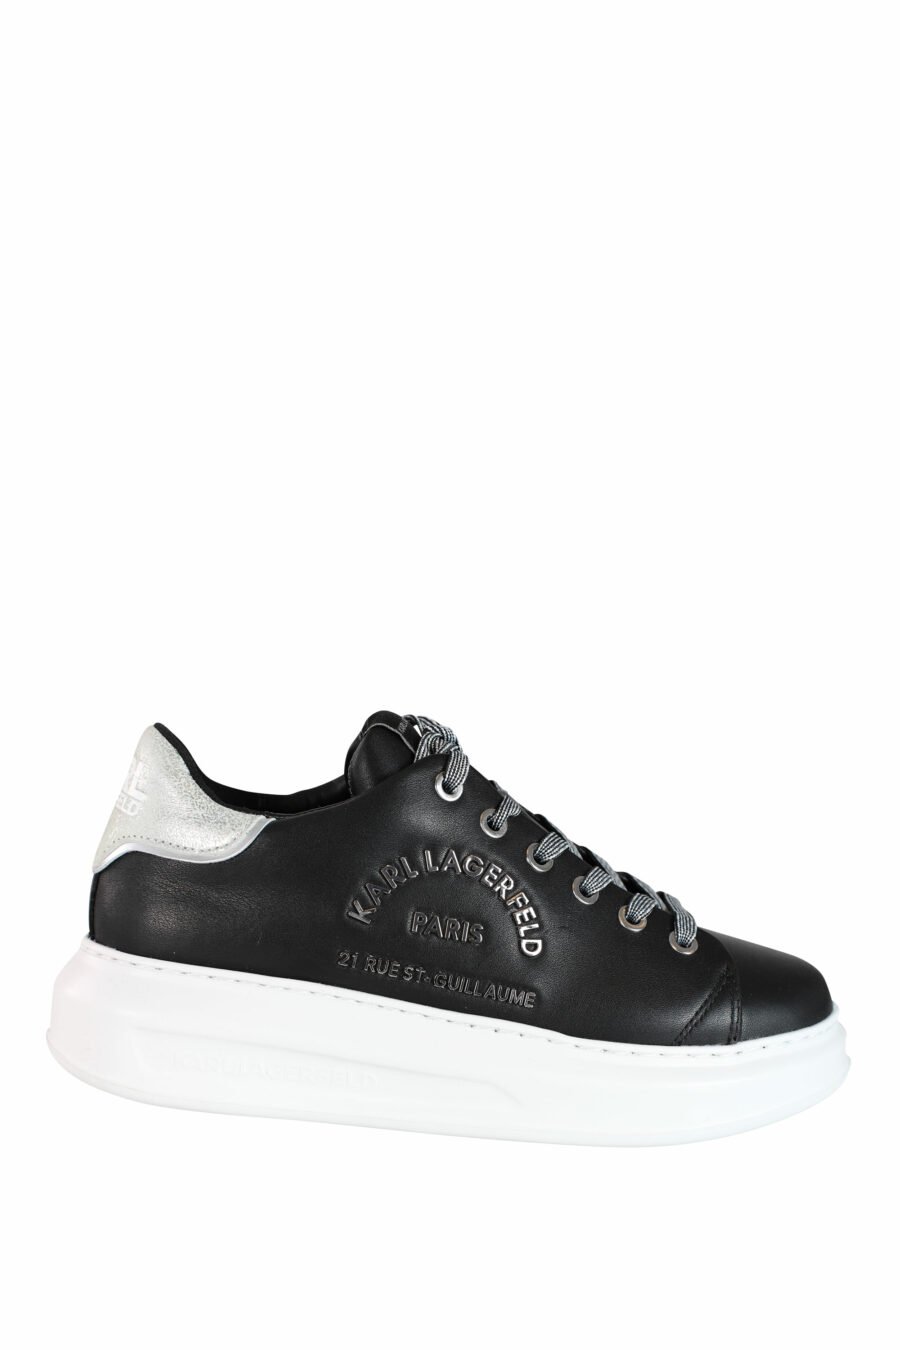 Zapatillas negras con detalles plateado y logo lettering "rue st guillaume" - IMG 3567